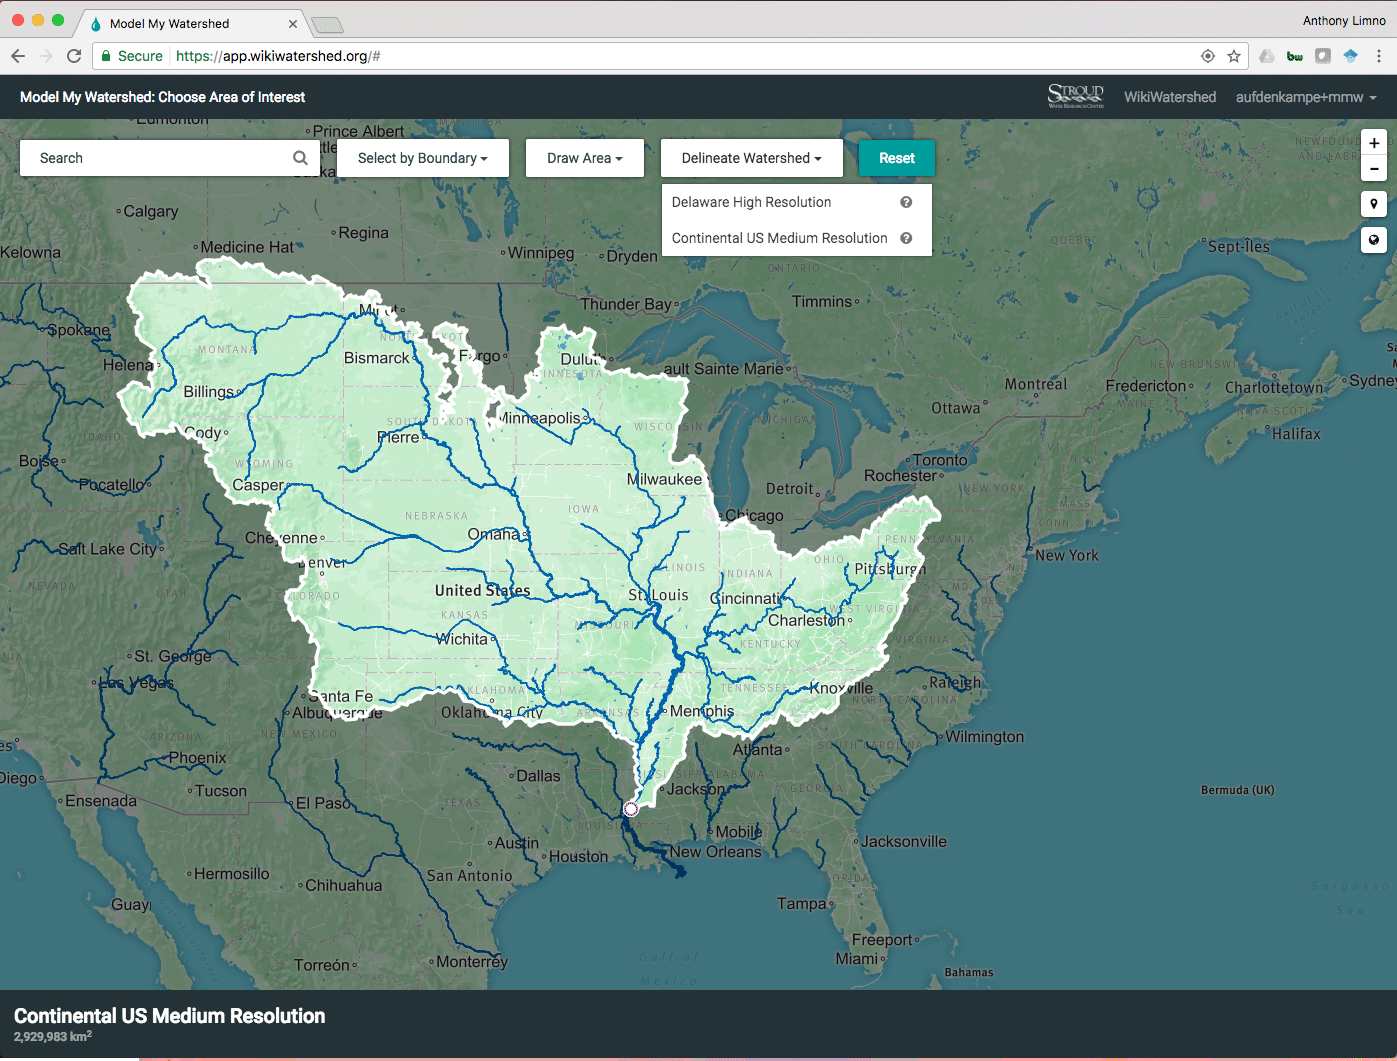 Monitor My Watershed and EnviroDIY: Open-Source Environmental